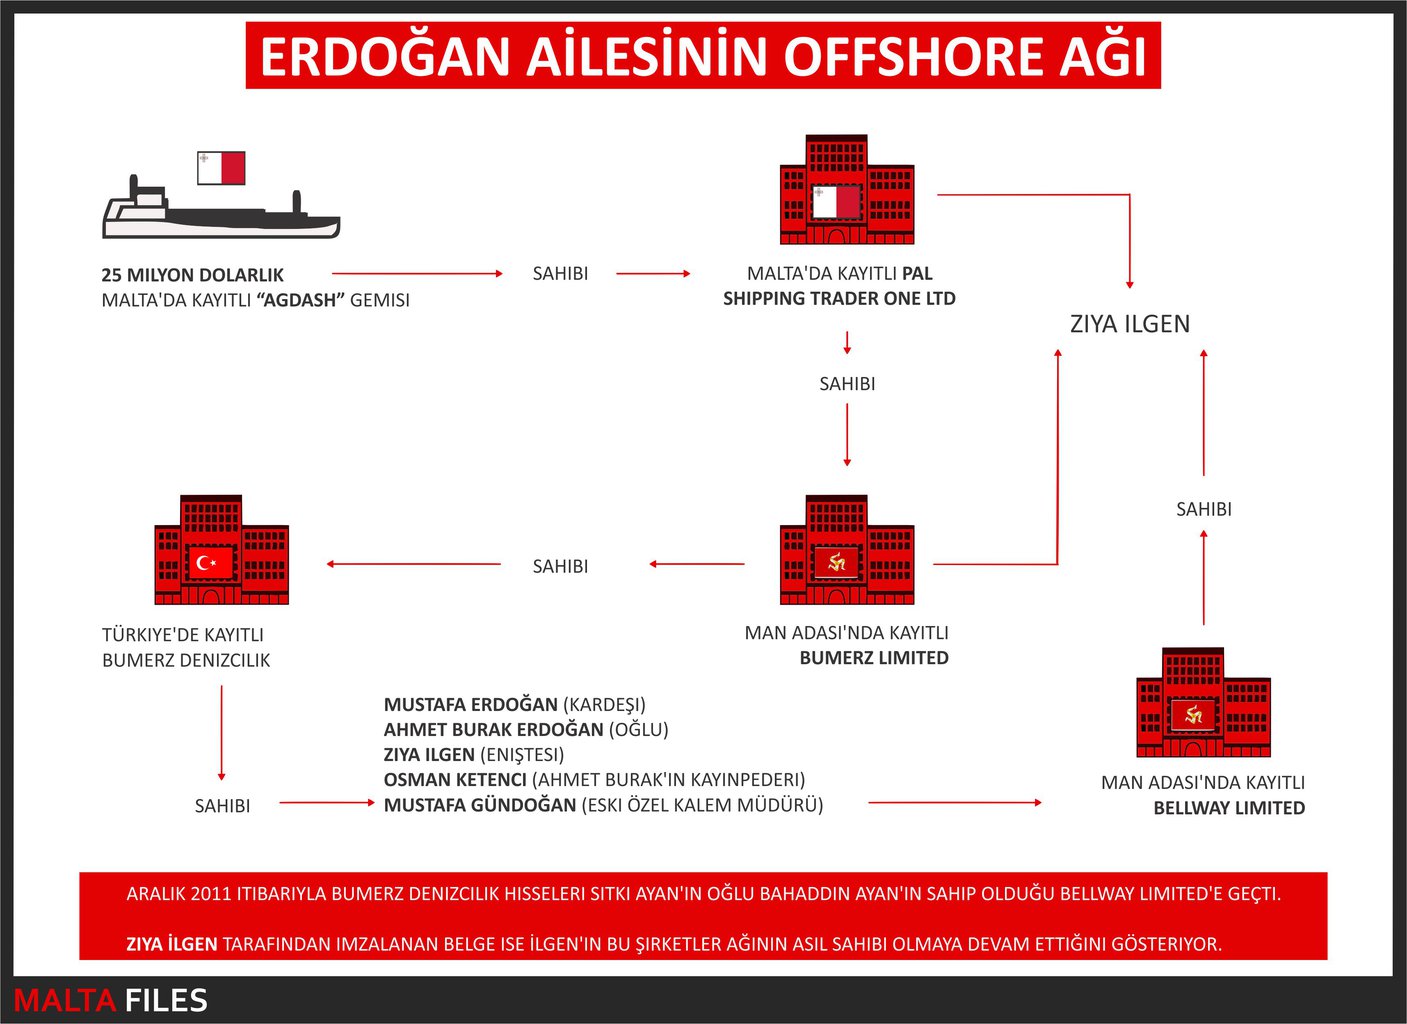 infographic erdogan family offshore turkish.jpg